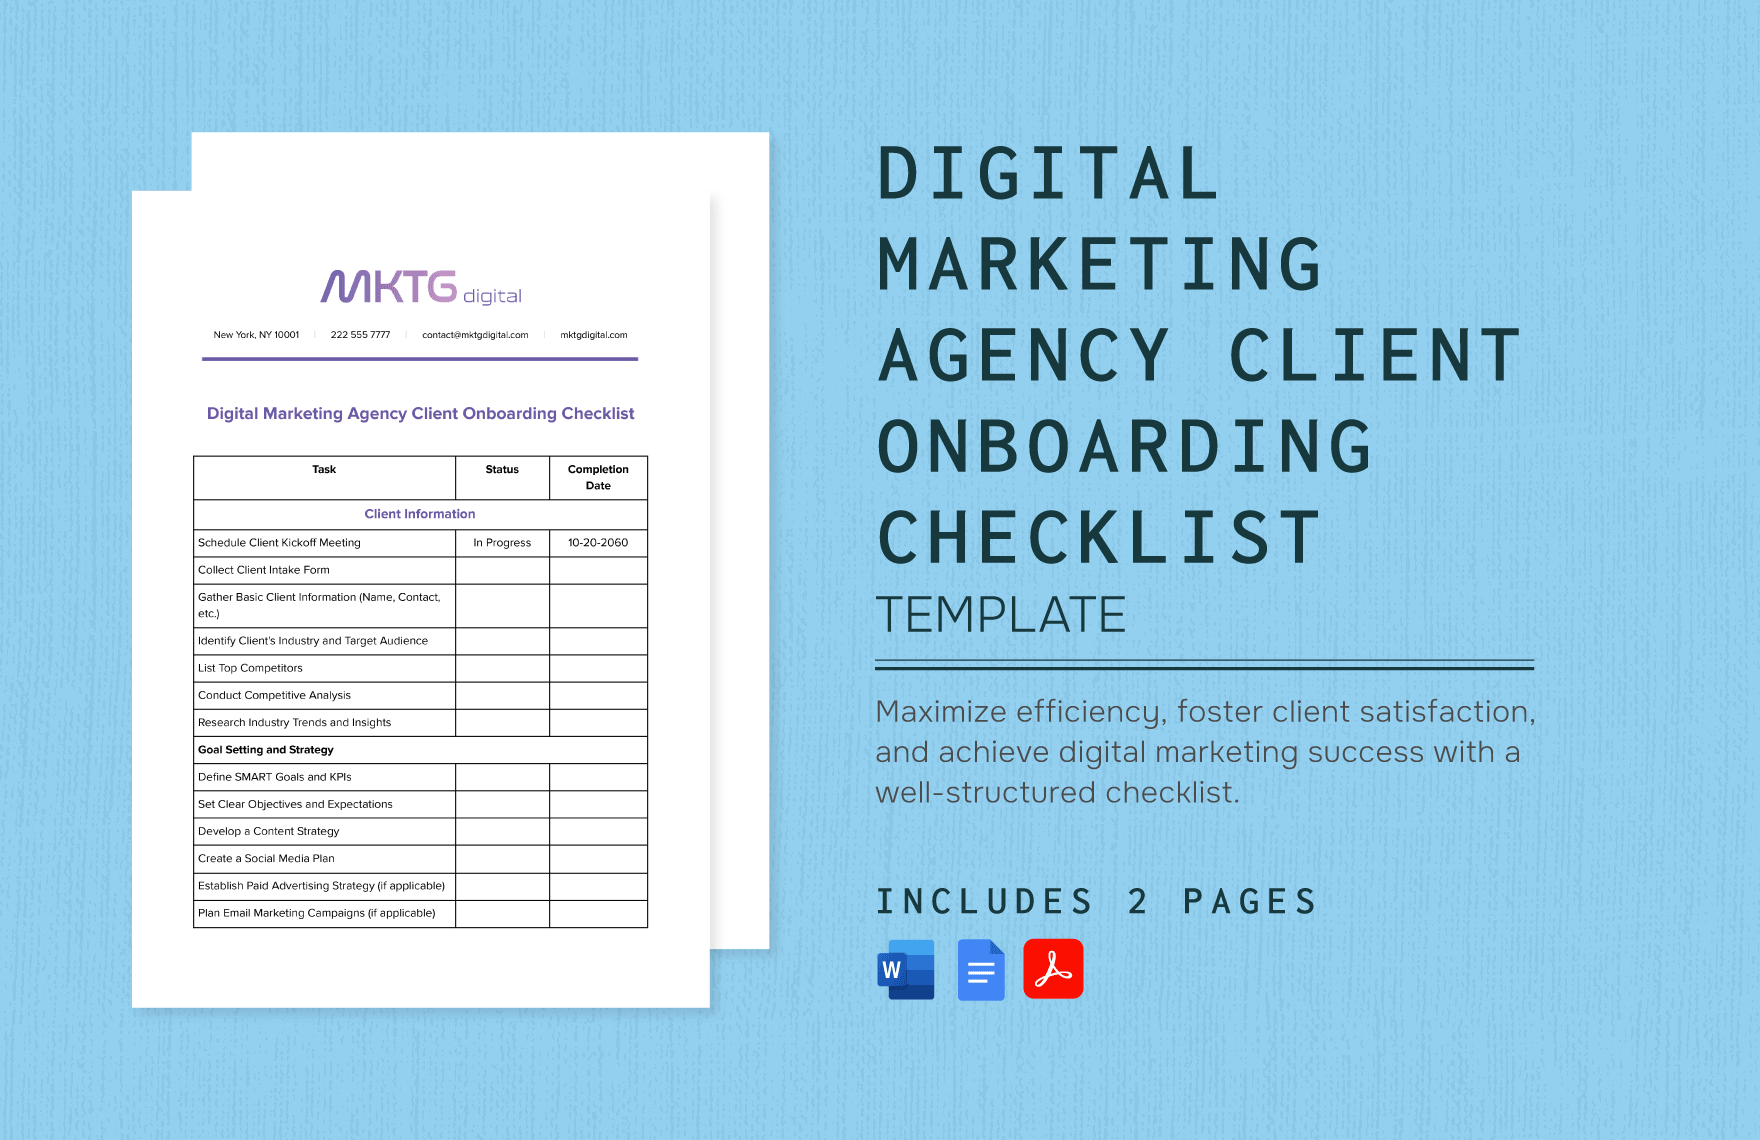 Digital Marketing Agency Client Onboarding Checklist Template